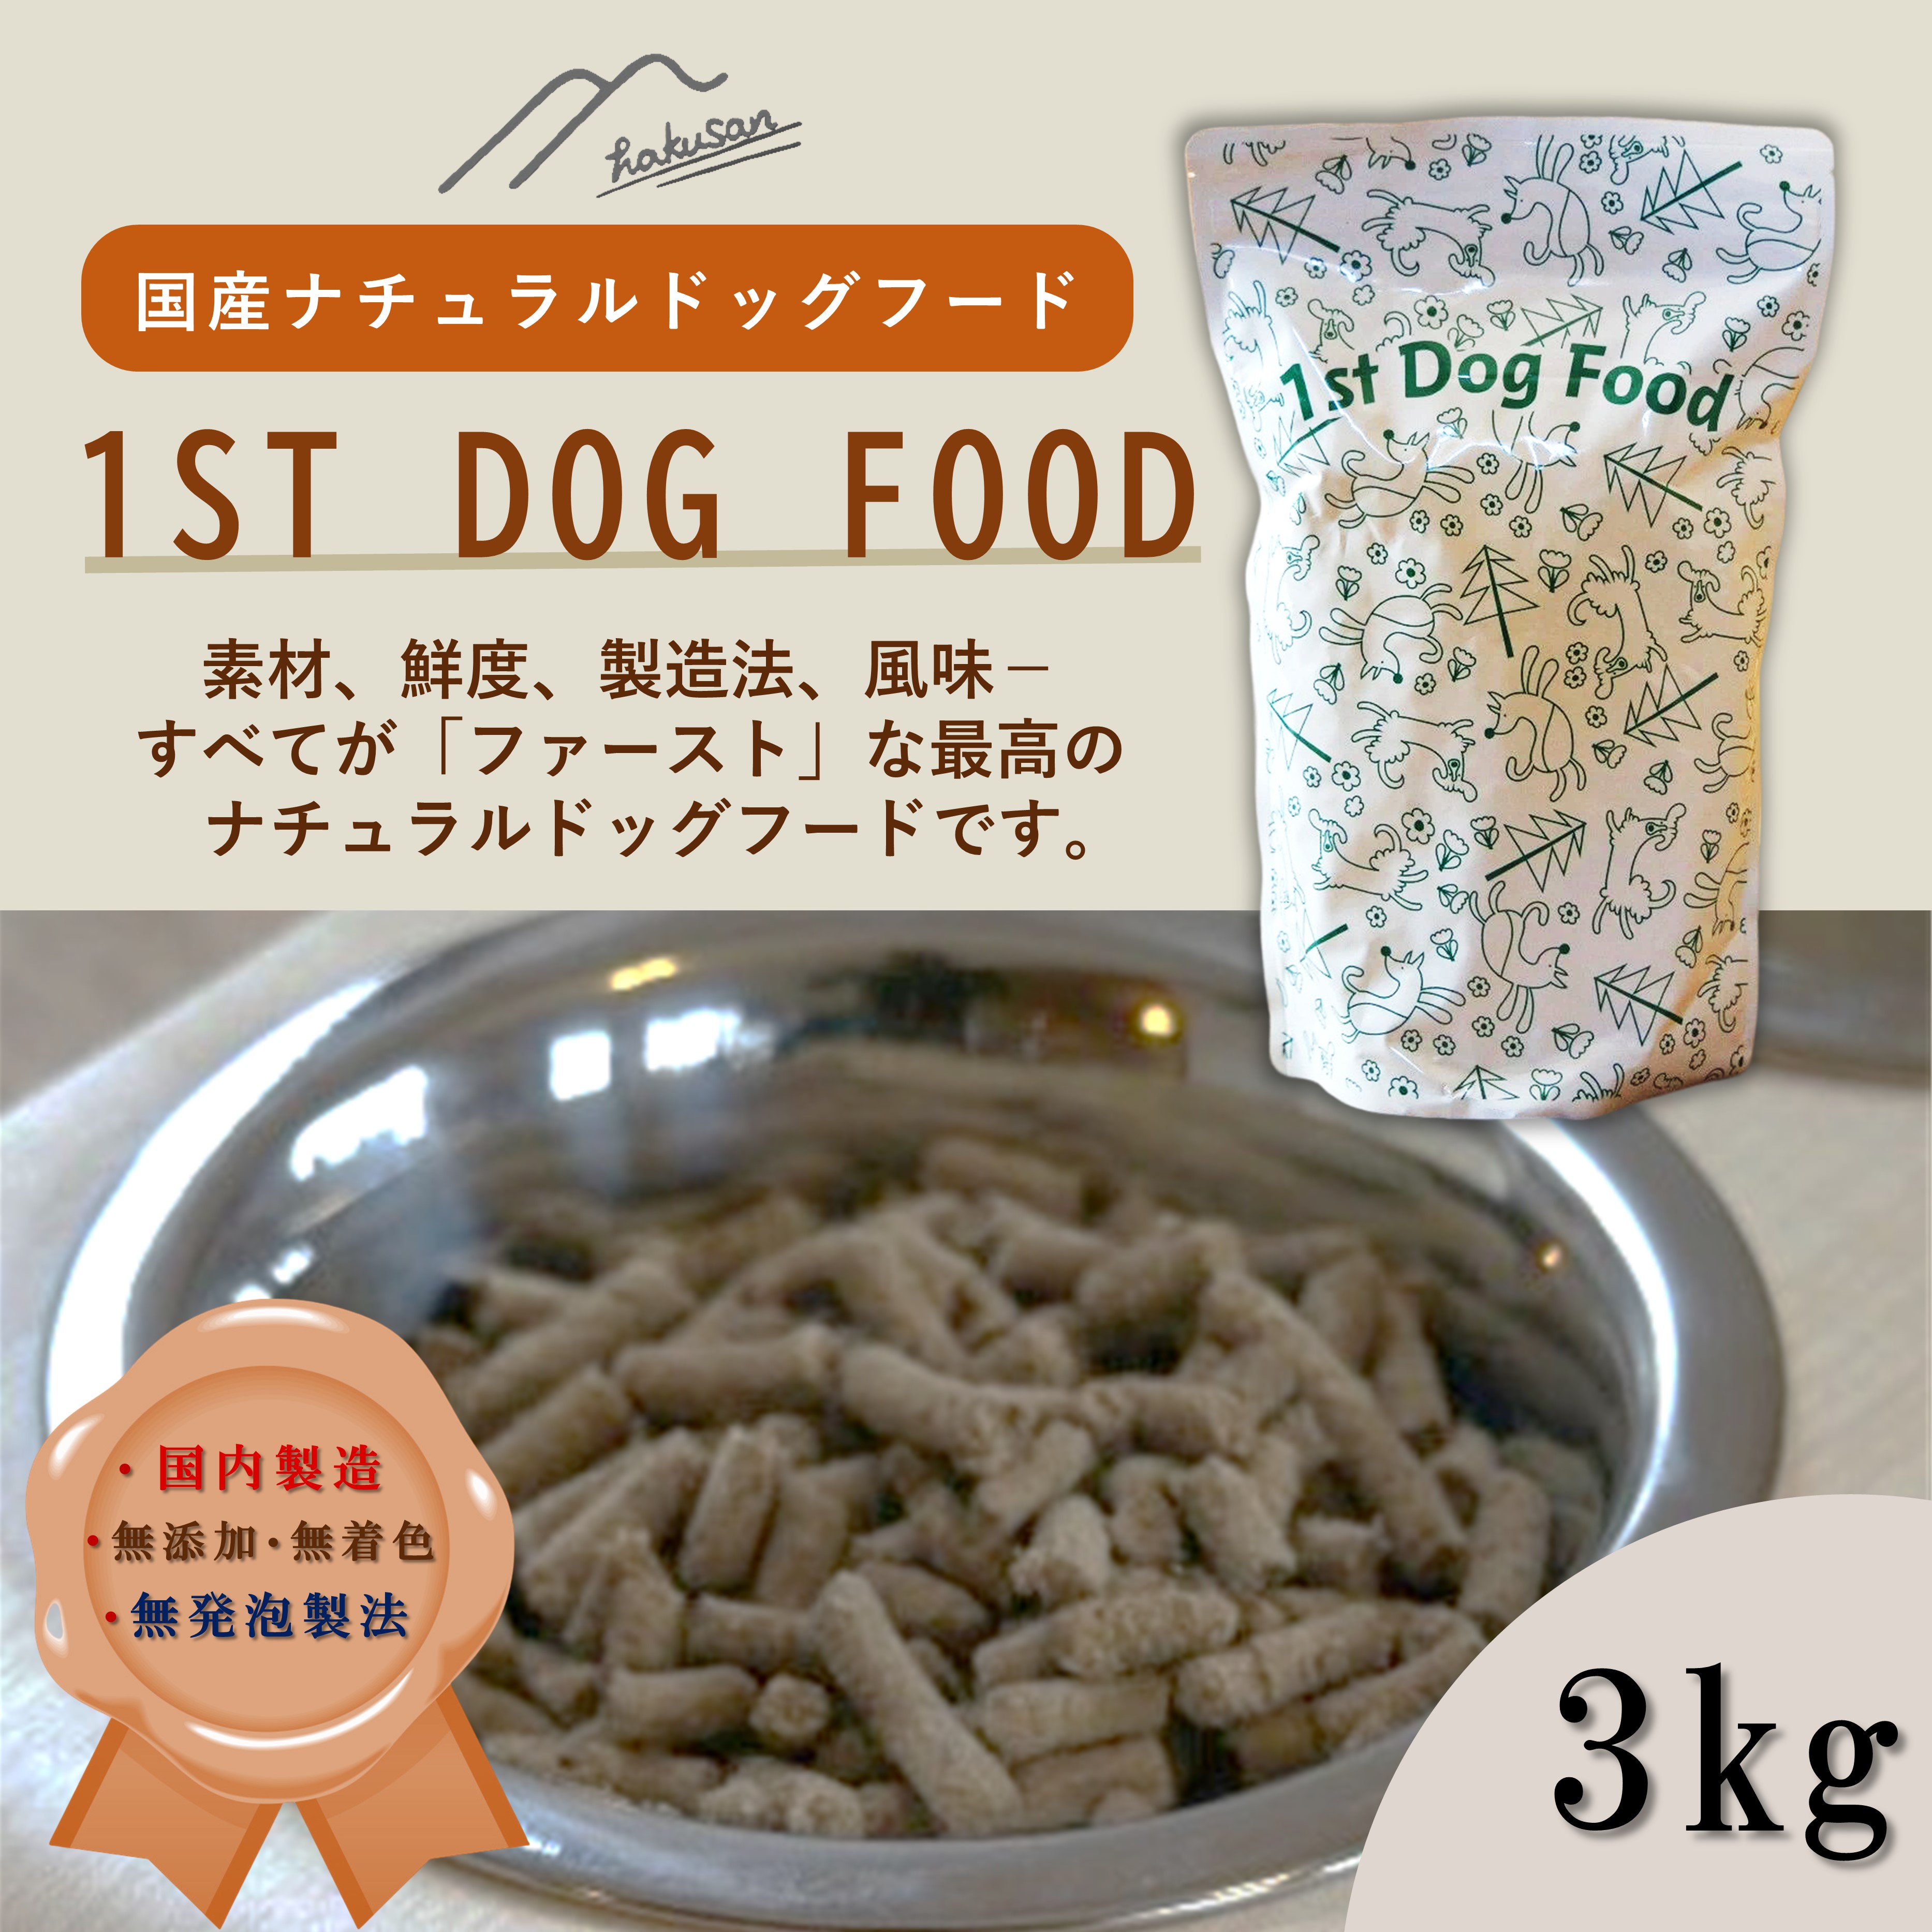  натуральный корм для собак [1stDogFood] 3 kilo 